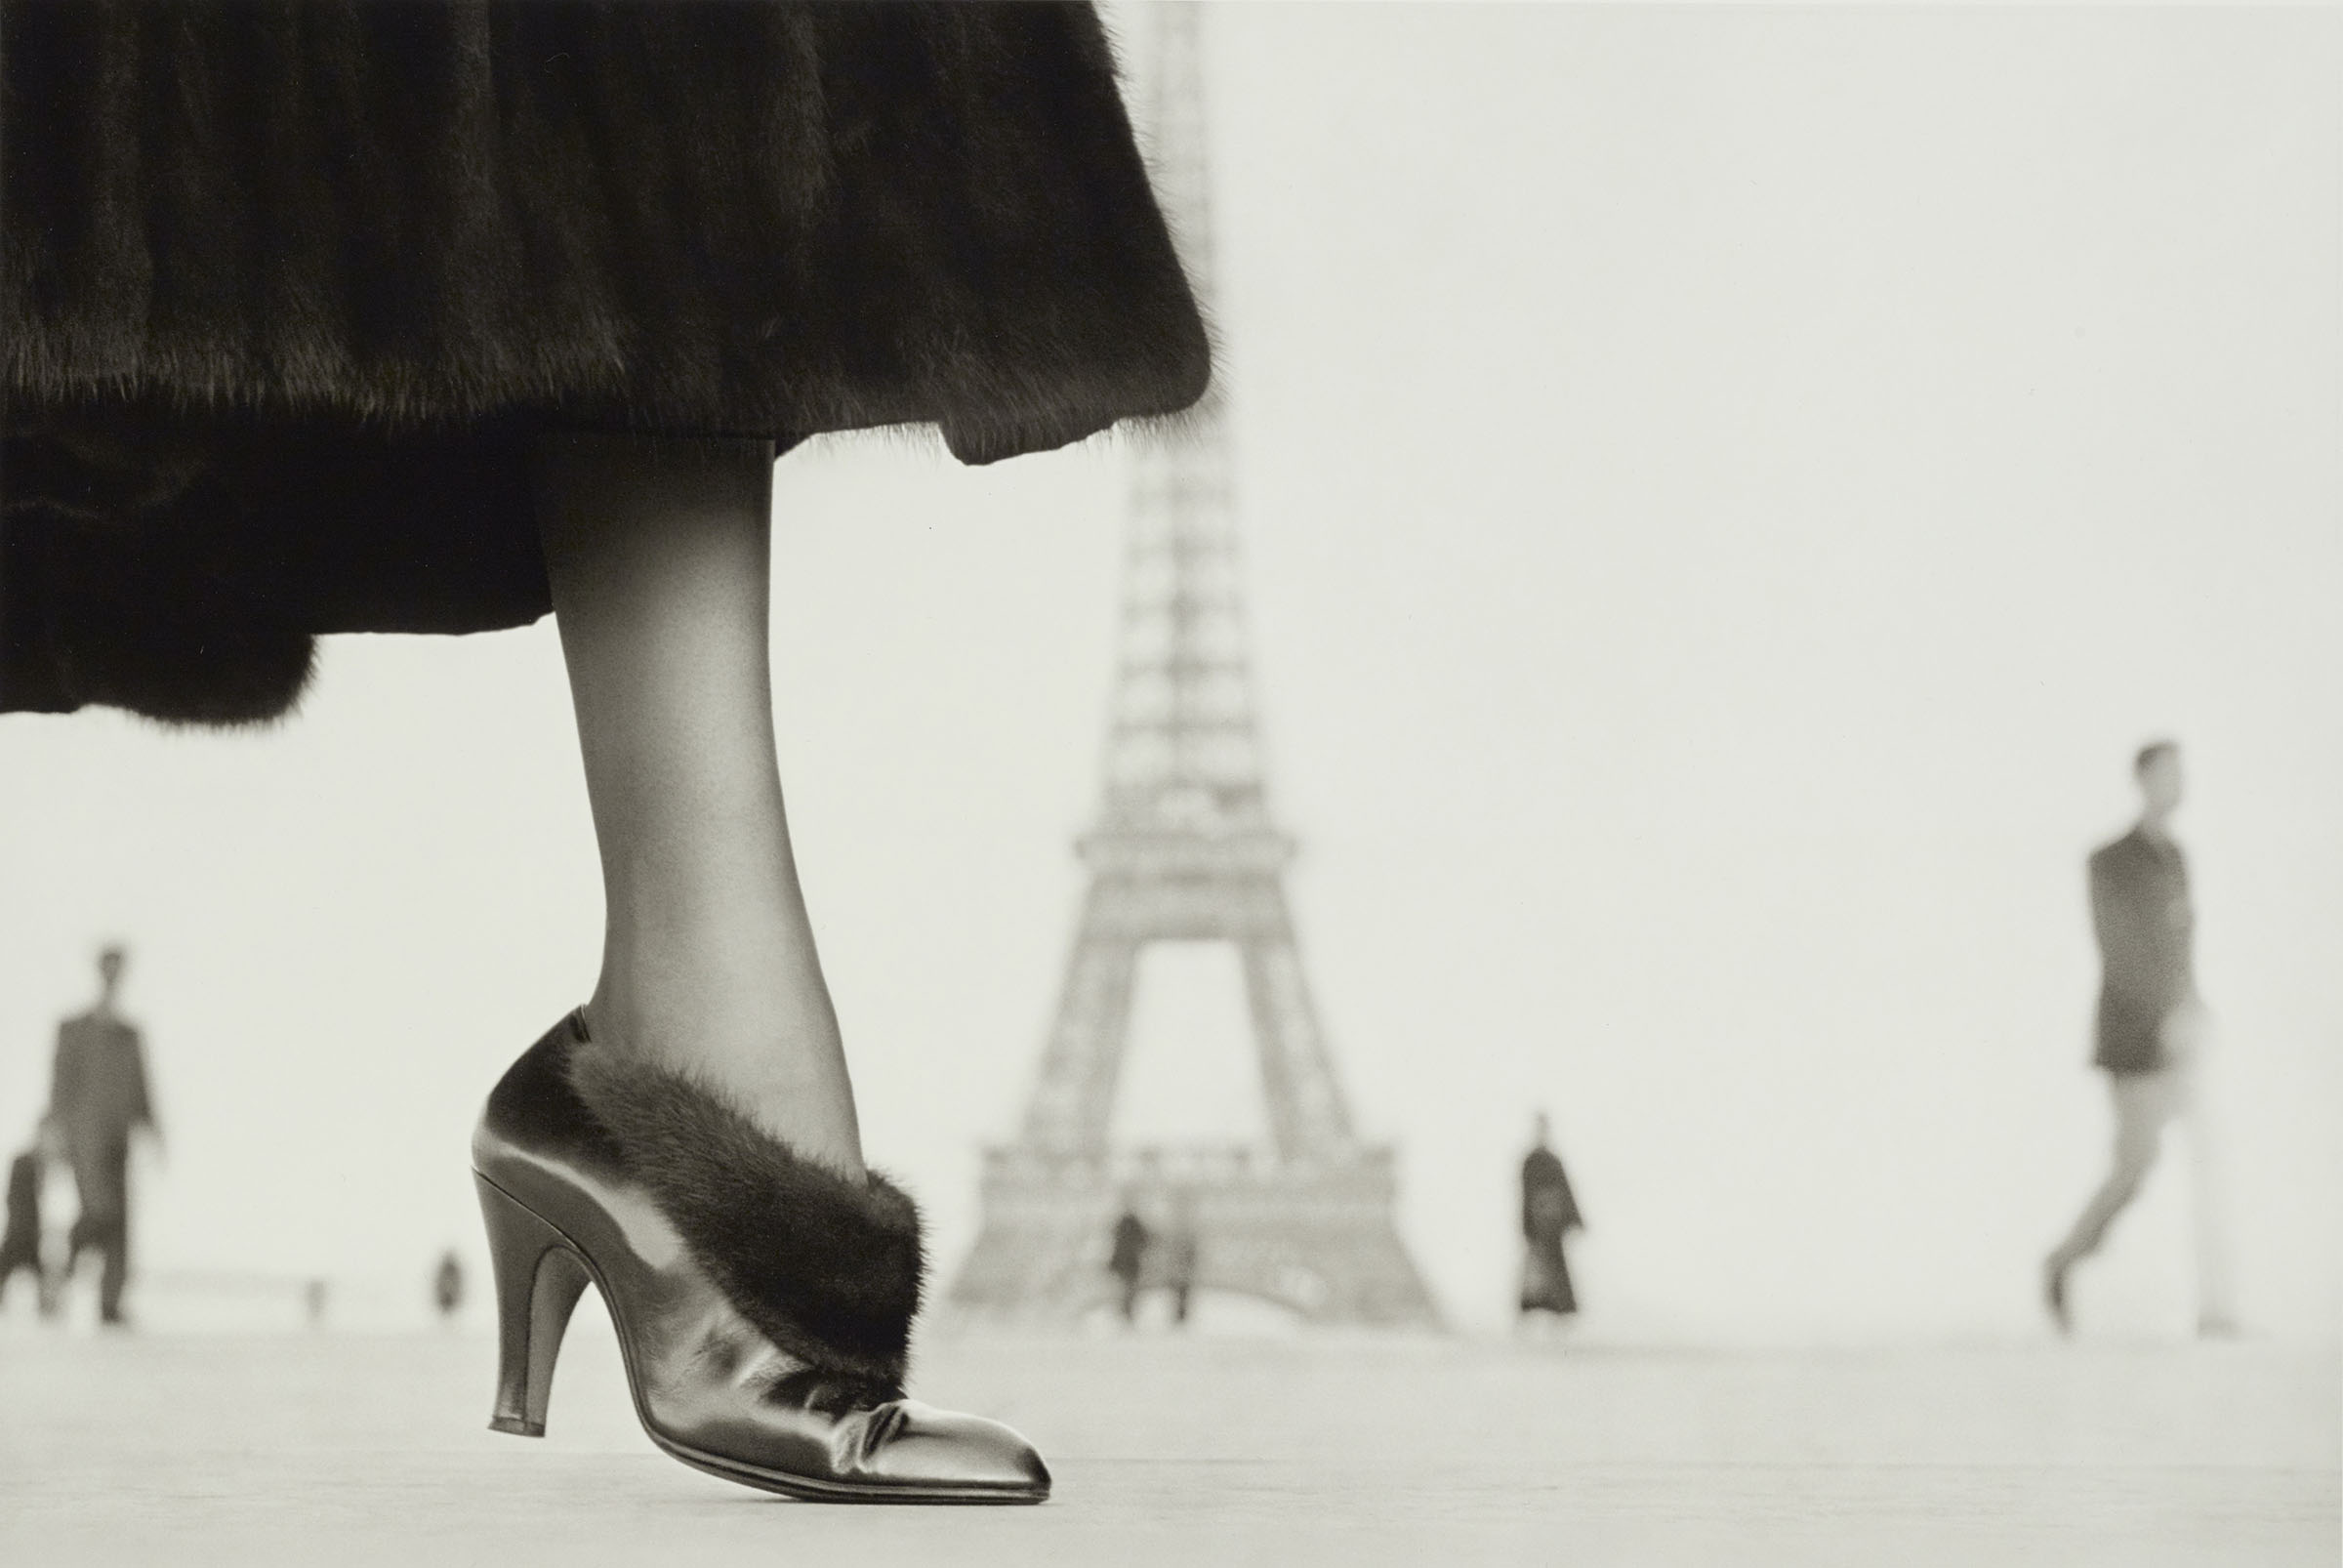 Richard Avedon, Shoe by Perugia, Plaxce du Trocadero, Paris, August 1948. © The Richard Avedon Foundation